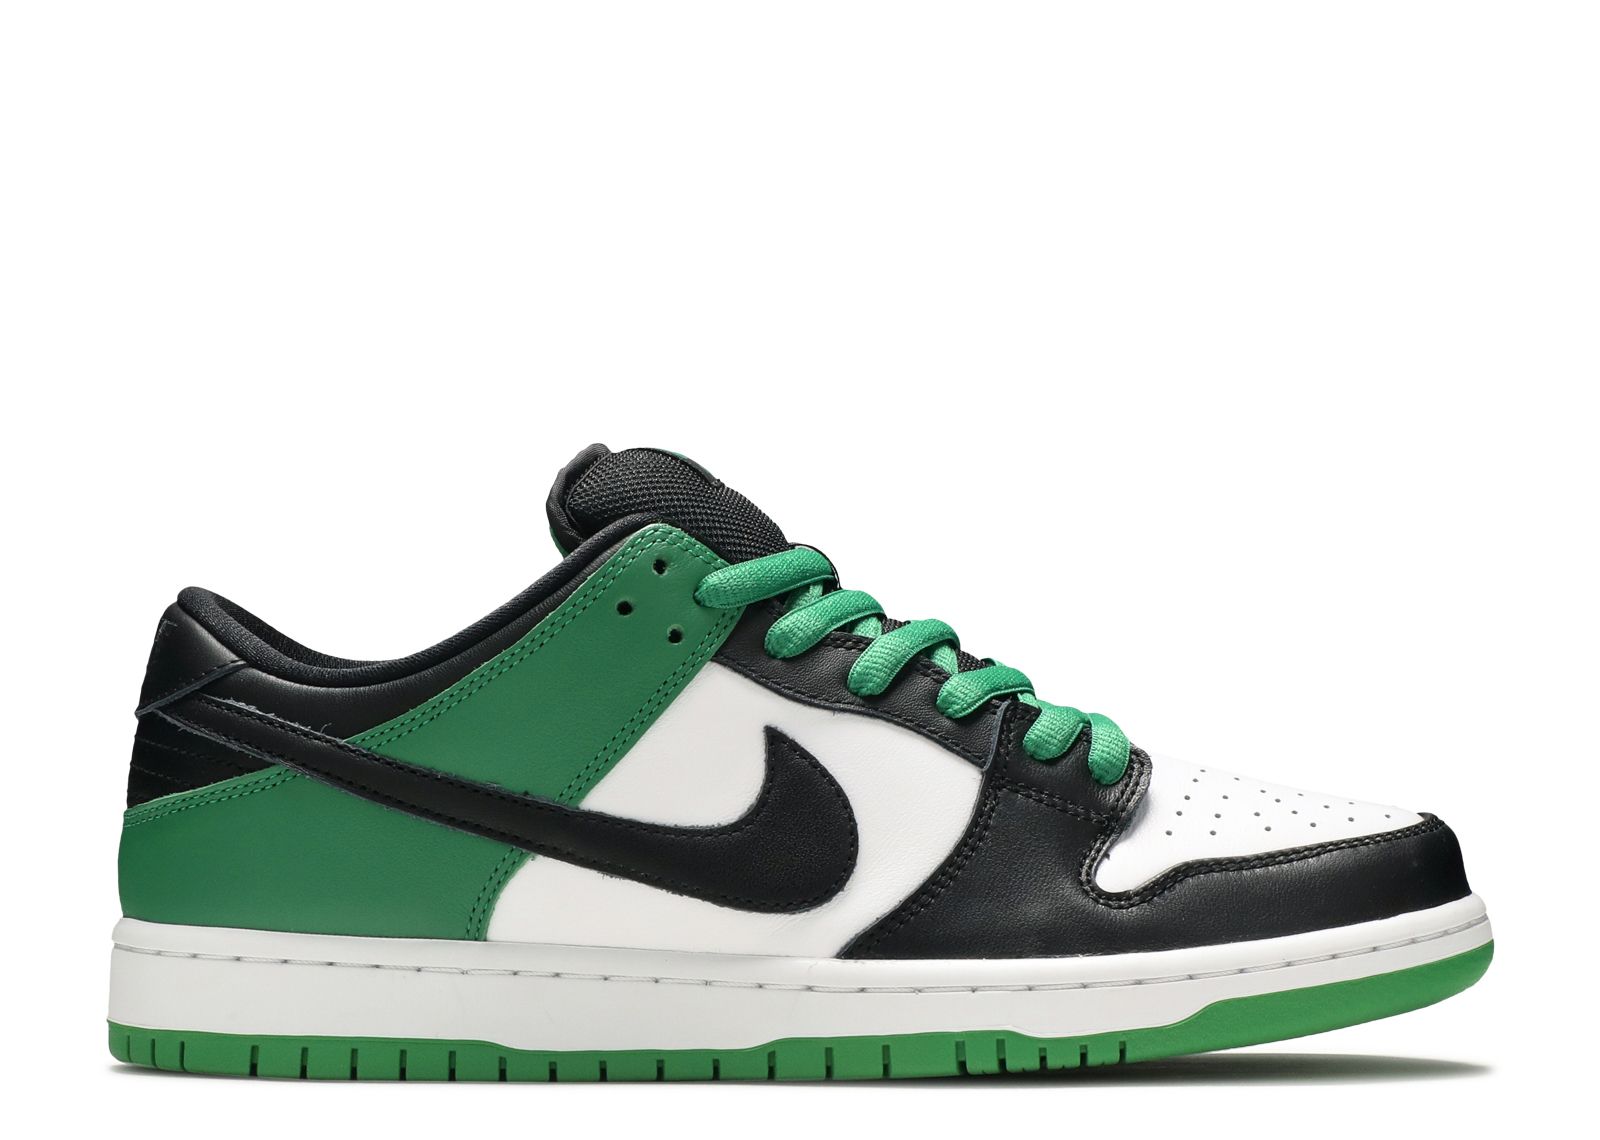 Low Pro SB 'Classic Green' Nike - BQ6817 302 - classic green/white/classic | Flight Club